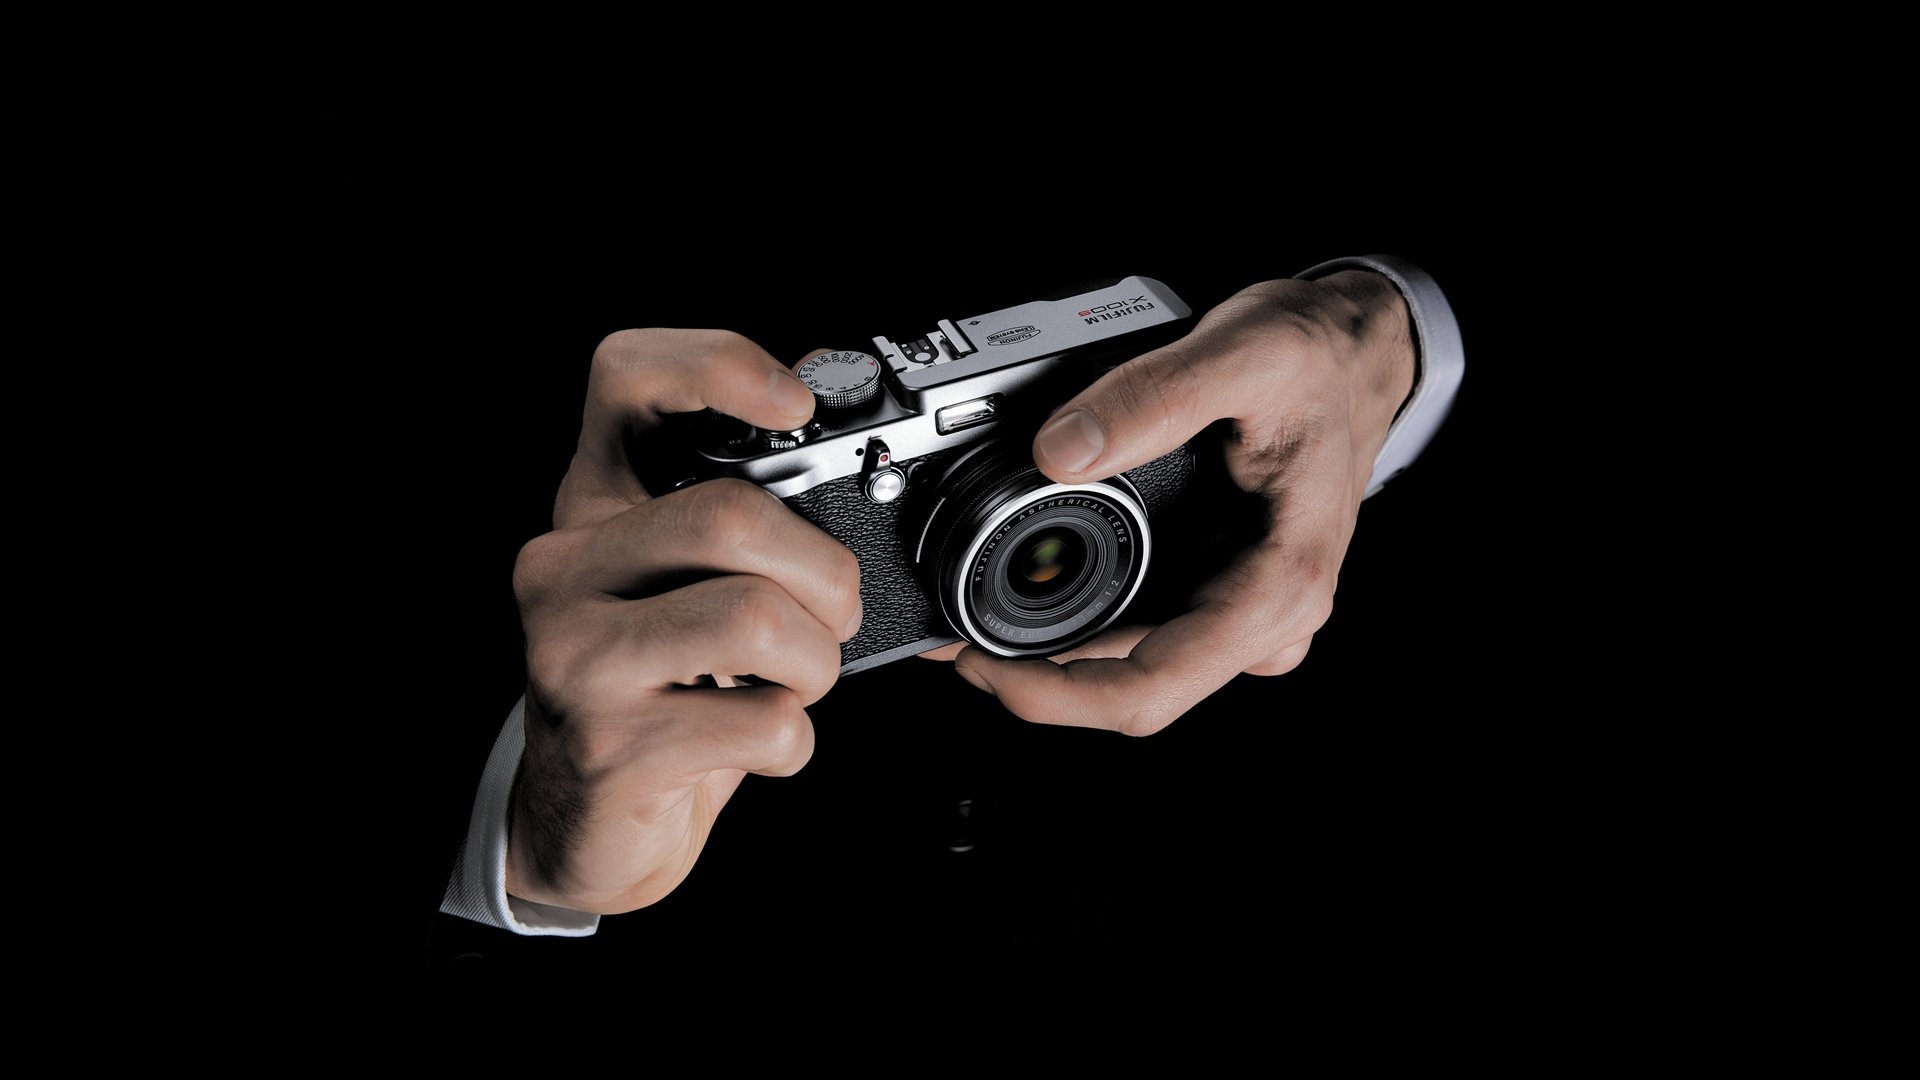 фотоаппарат фотокамера x100s руки мужчина фотограф объектив